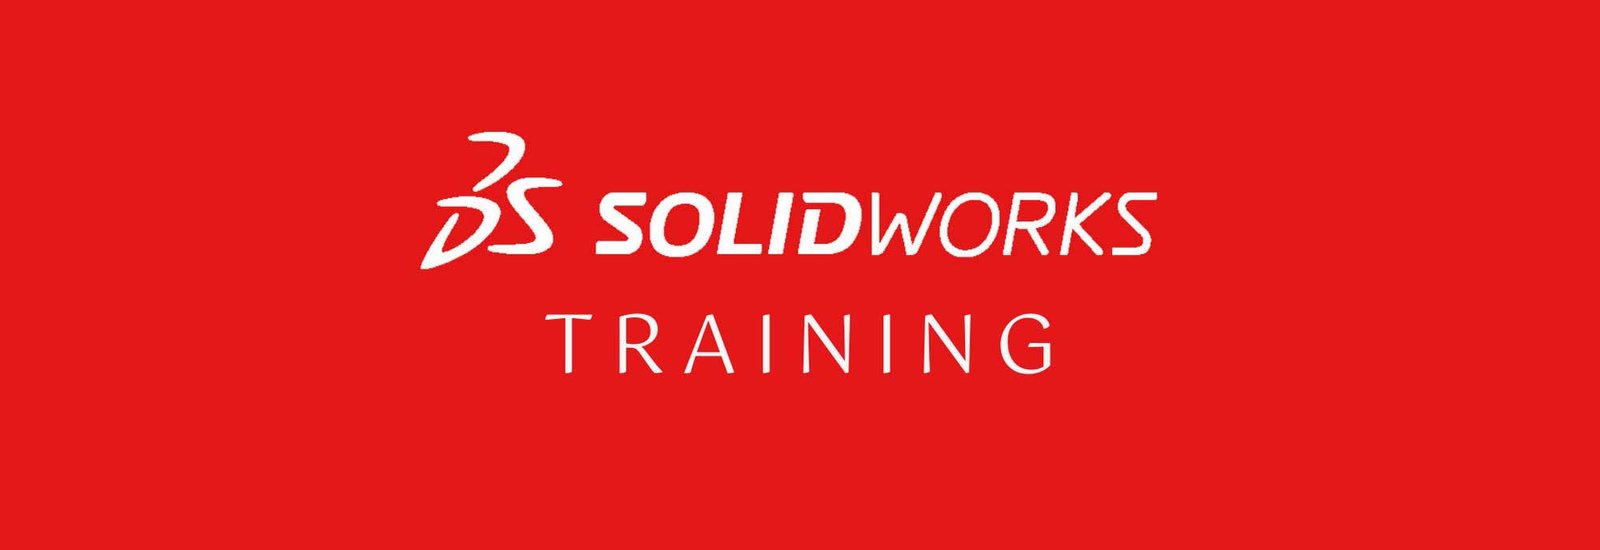 solidworks training